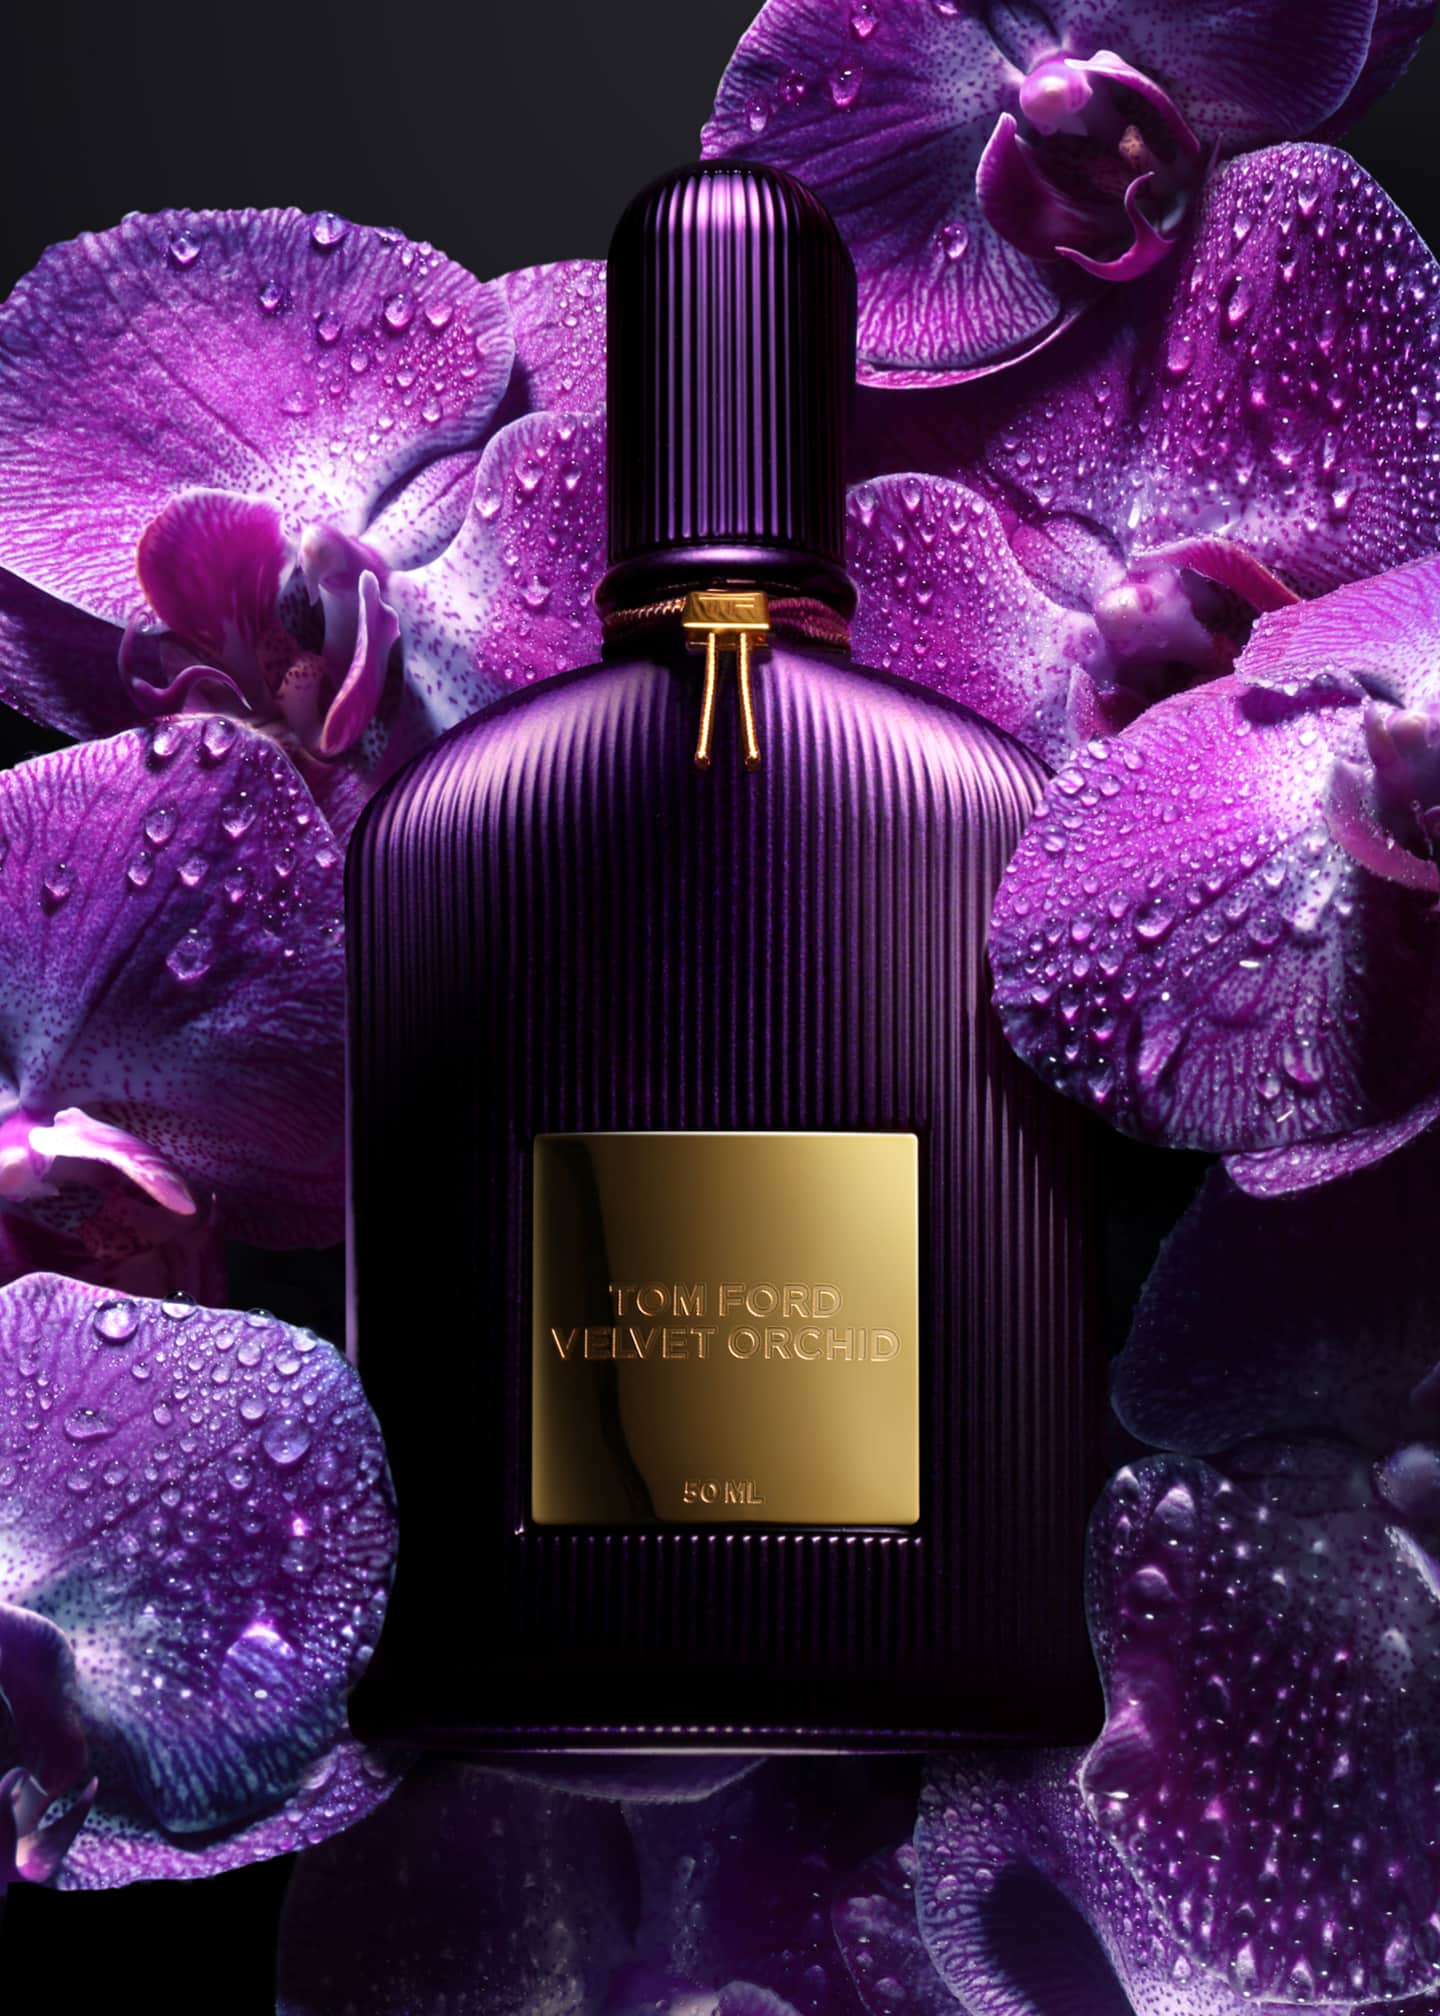 TOM FORD Velvet Orchid Eau De Parfum, 1.7 oz. - Bergdorf Goodman